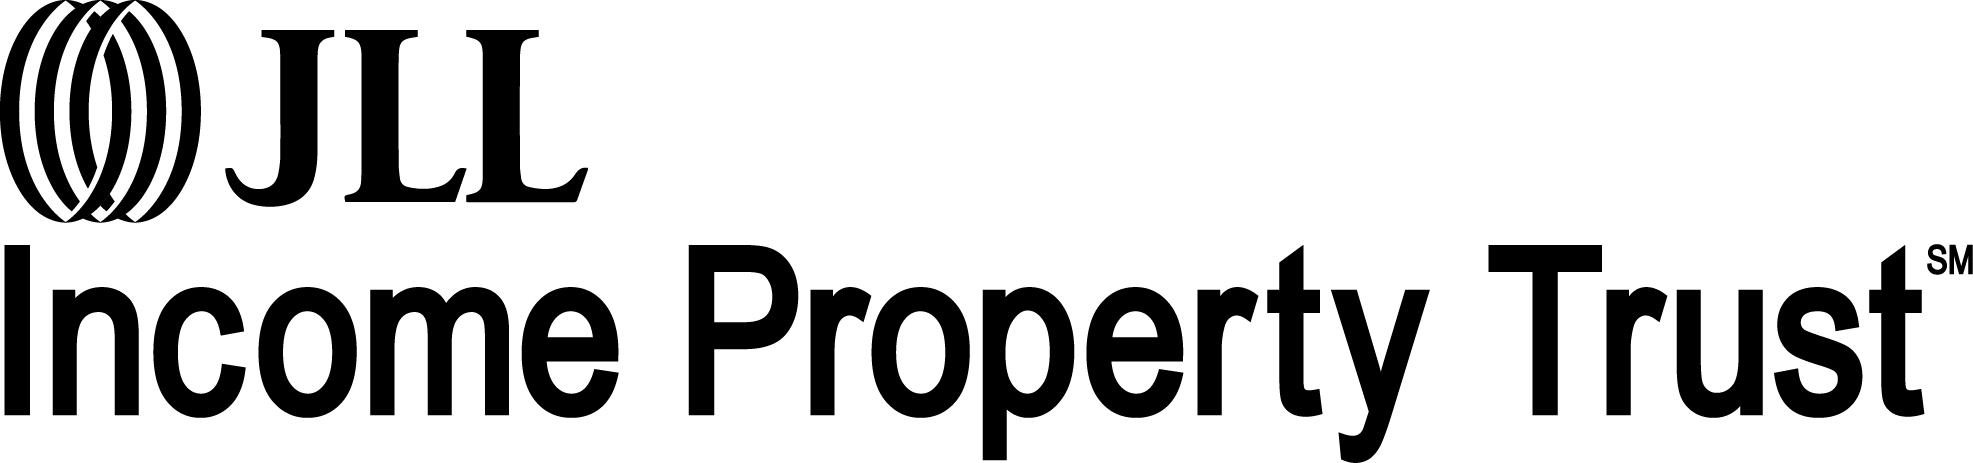 Jones Lang LaSalle (JLL) Income Property Trust, Inc. Company Logo